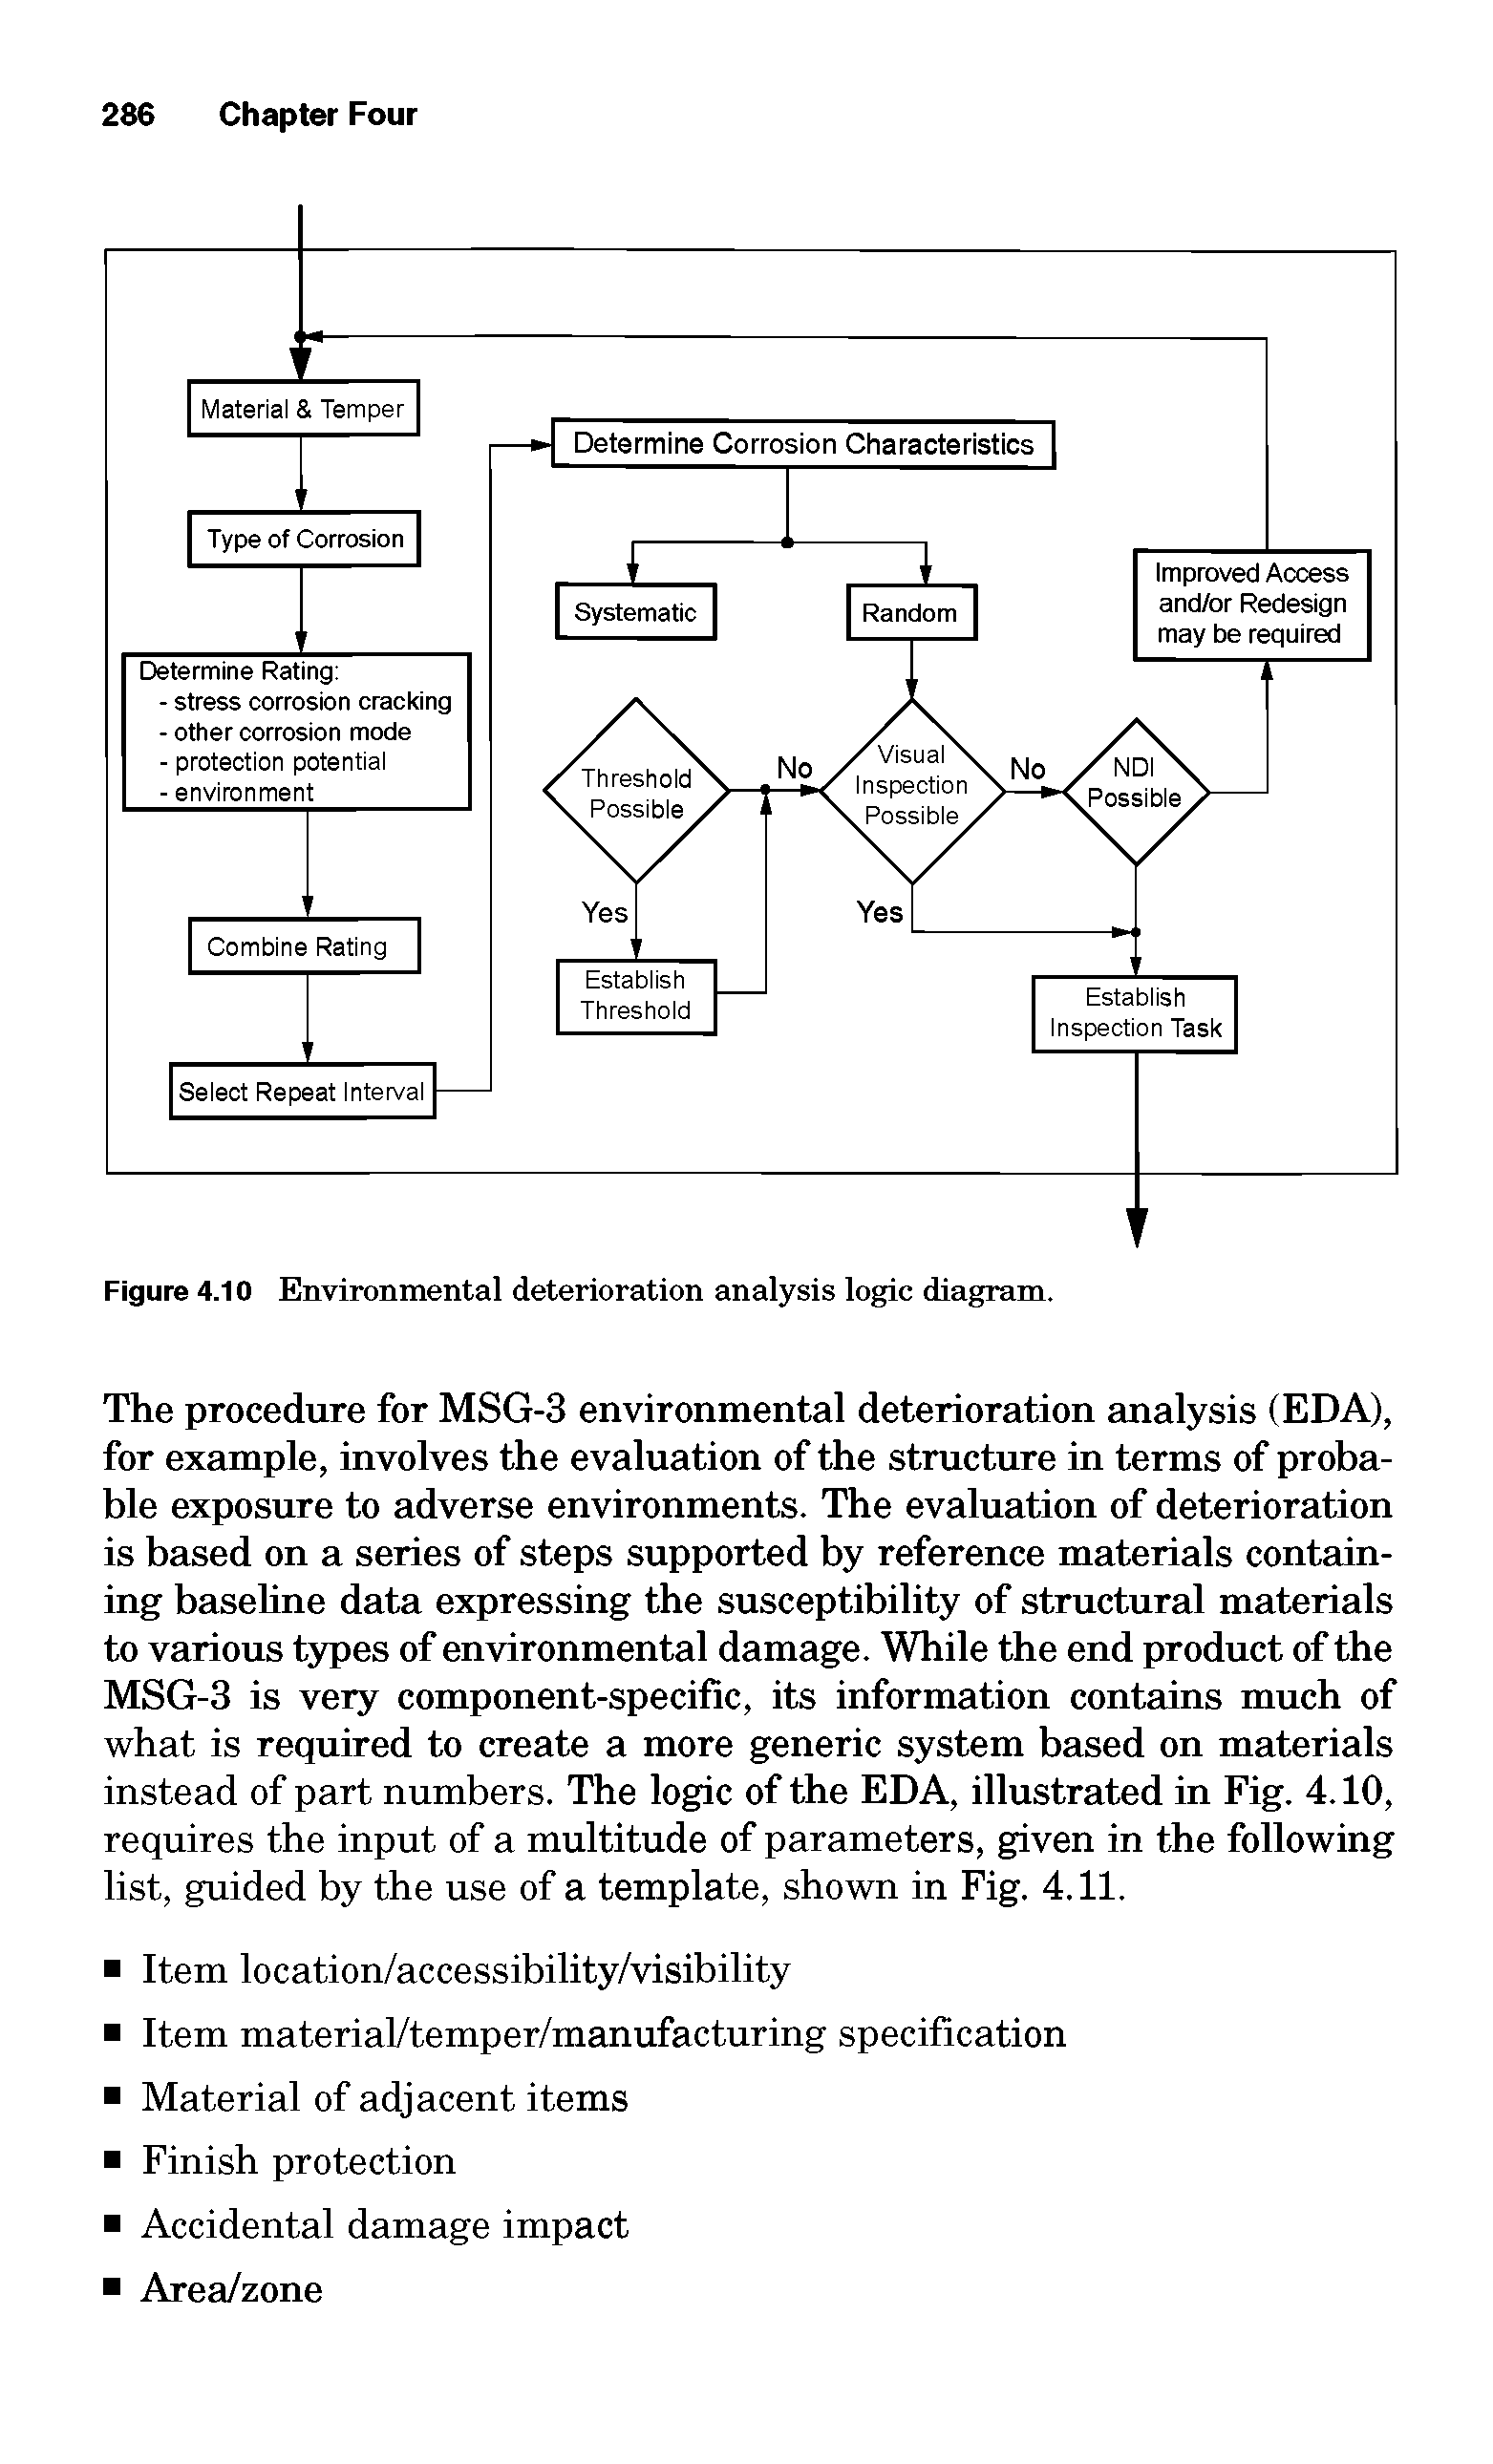 Figure 4.10 Environmental deterioration analysis logic diagram.